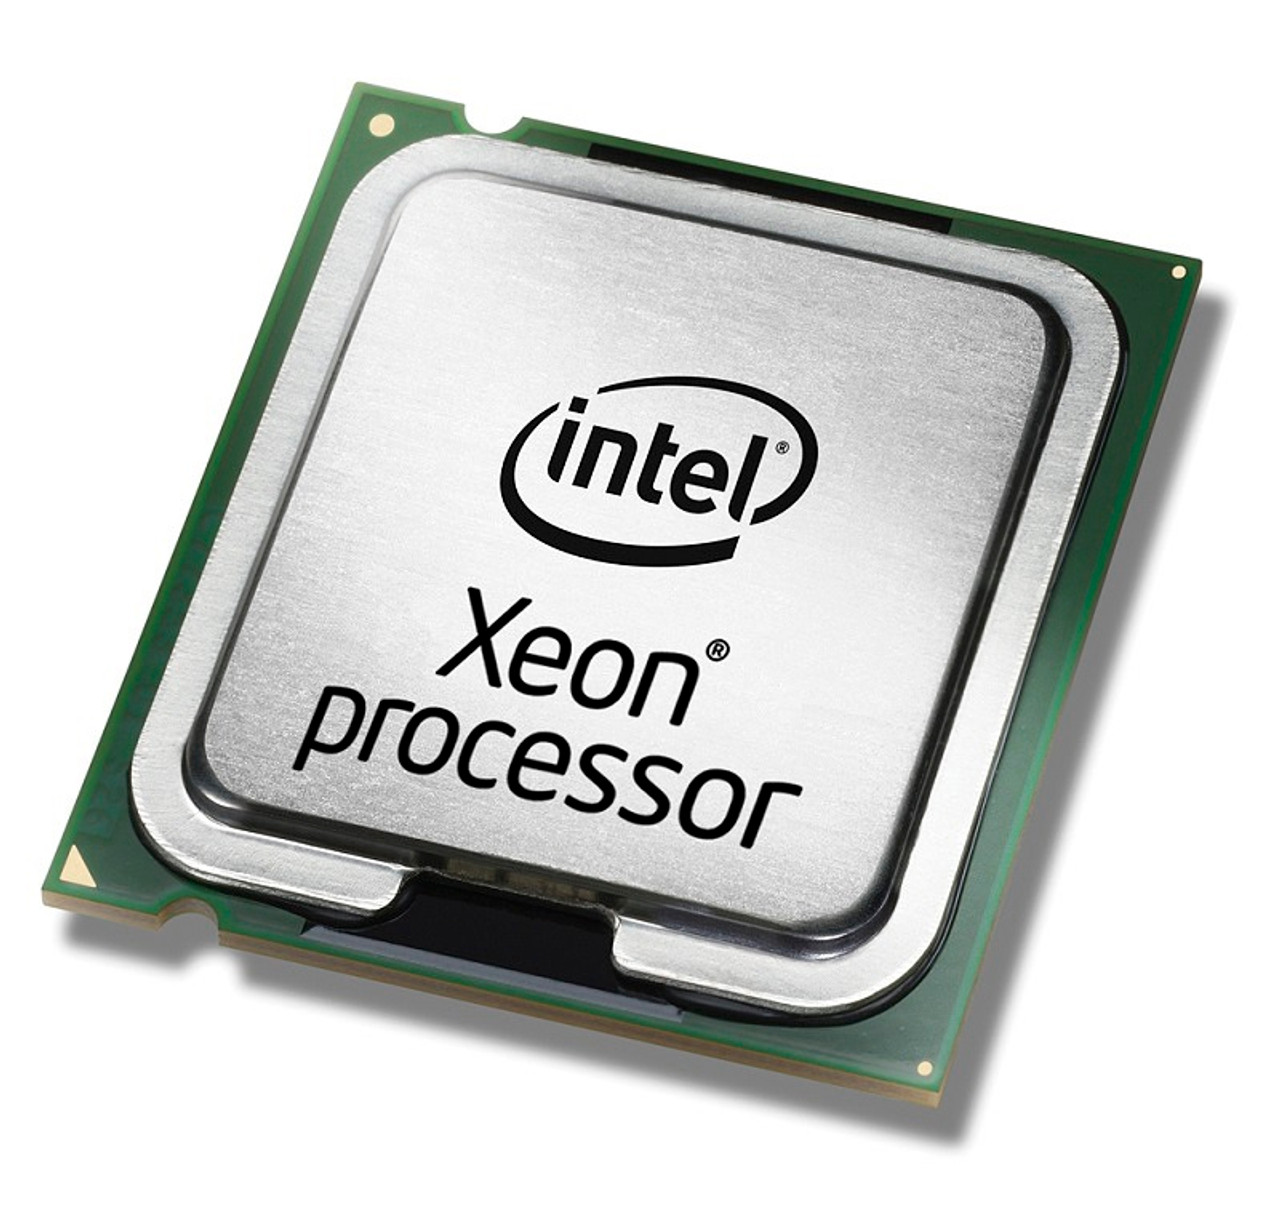 744133-B21 - HP Intel Xeon 10-core E5-2450lv2 1.7GHz 25mb L3 Cache 7.2gt/s Qpi Socket Fclga-1356 22nm 60w Processor Only for Sl4540 Gen8 Server